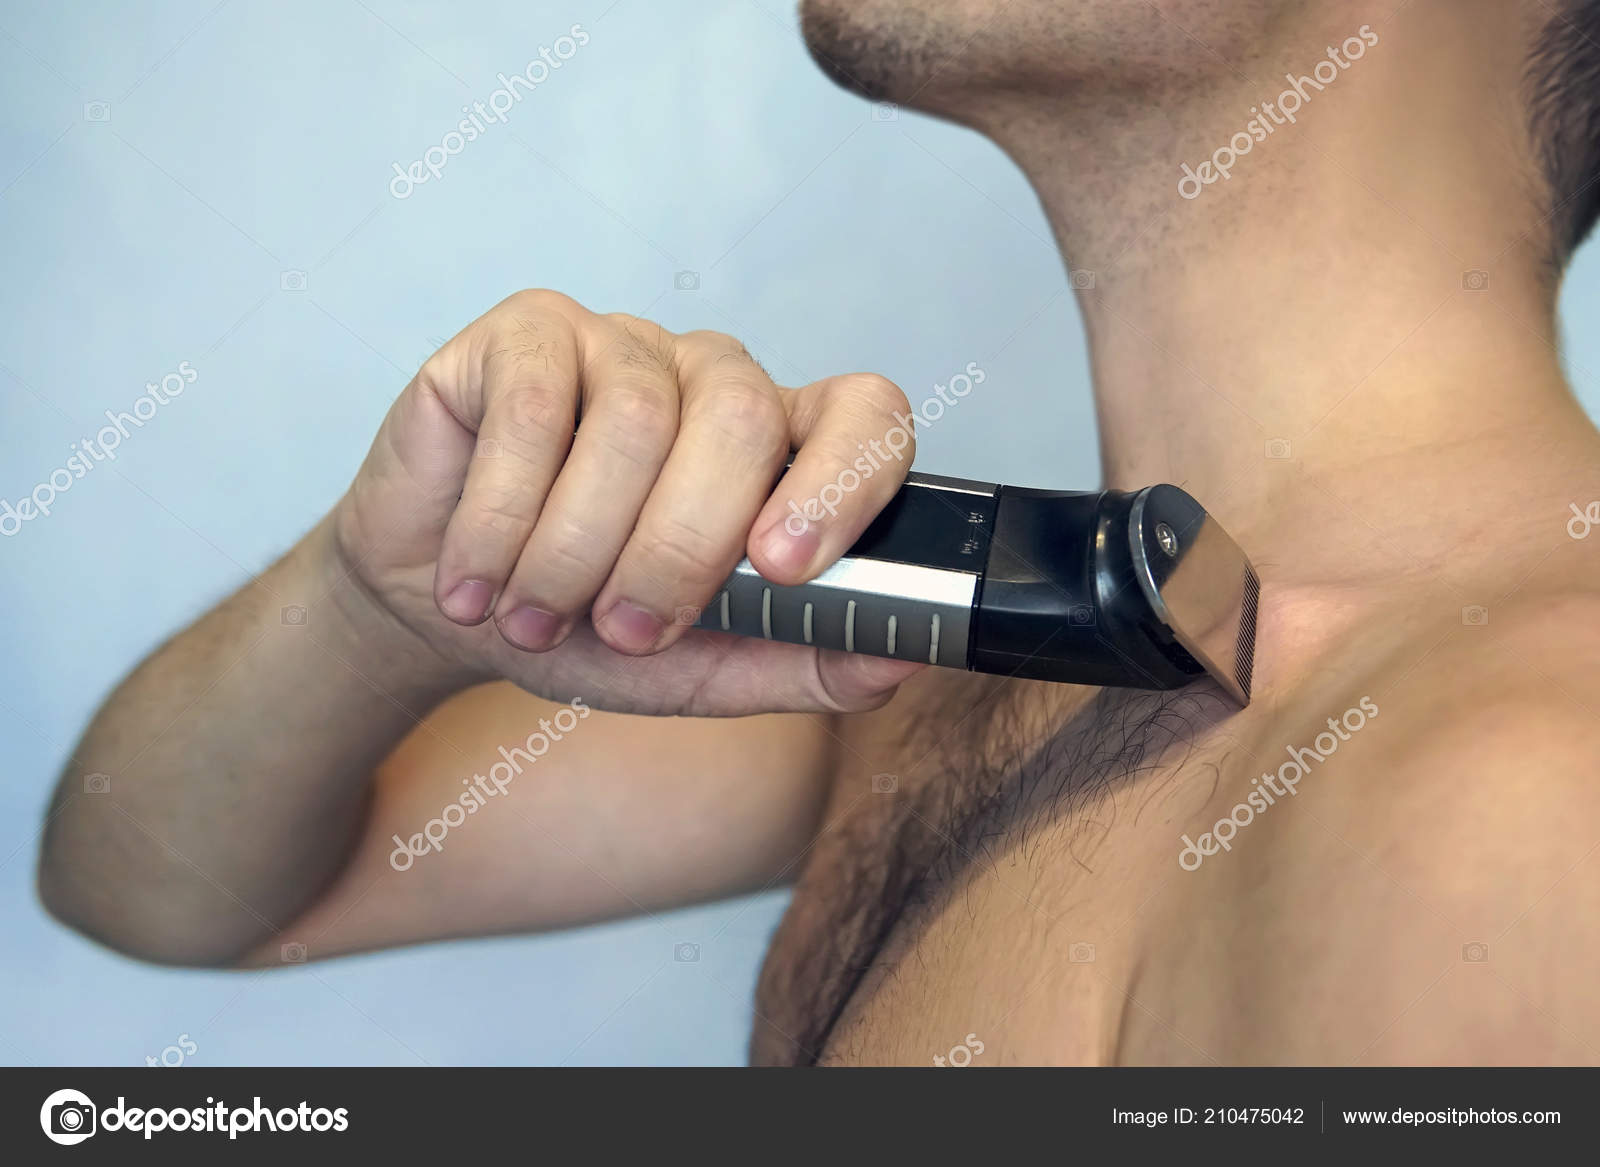 chest trimmer